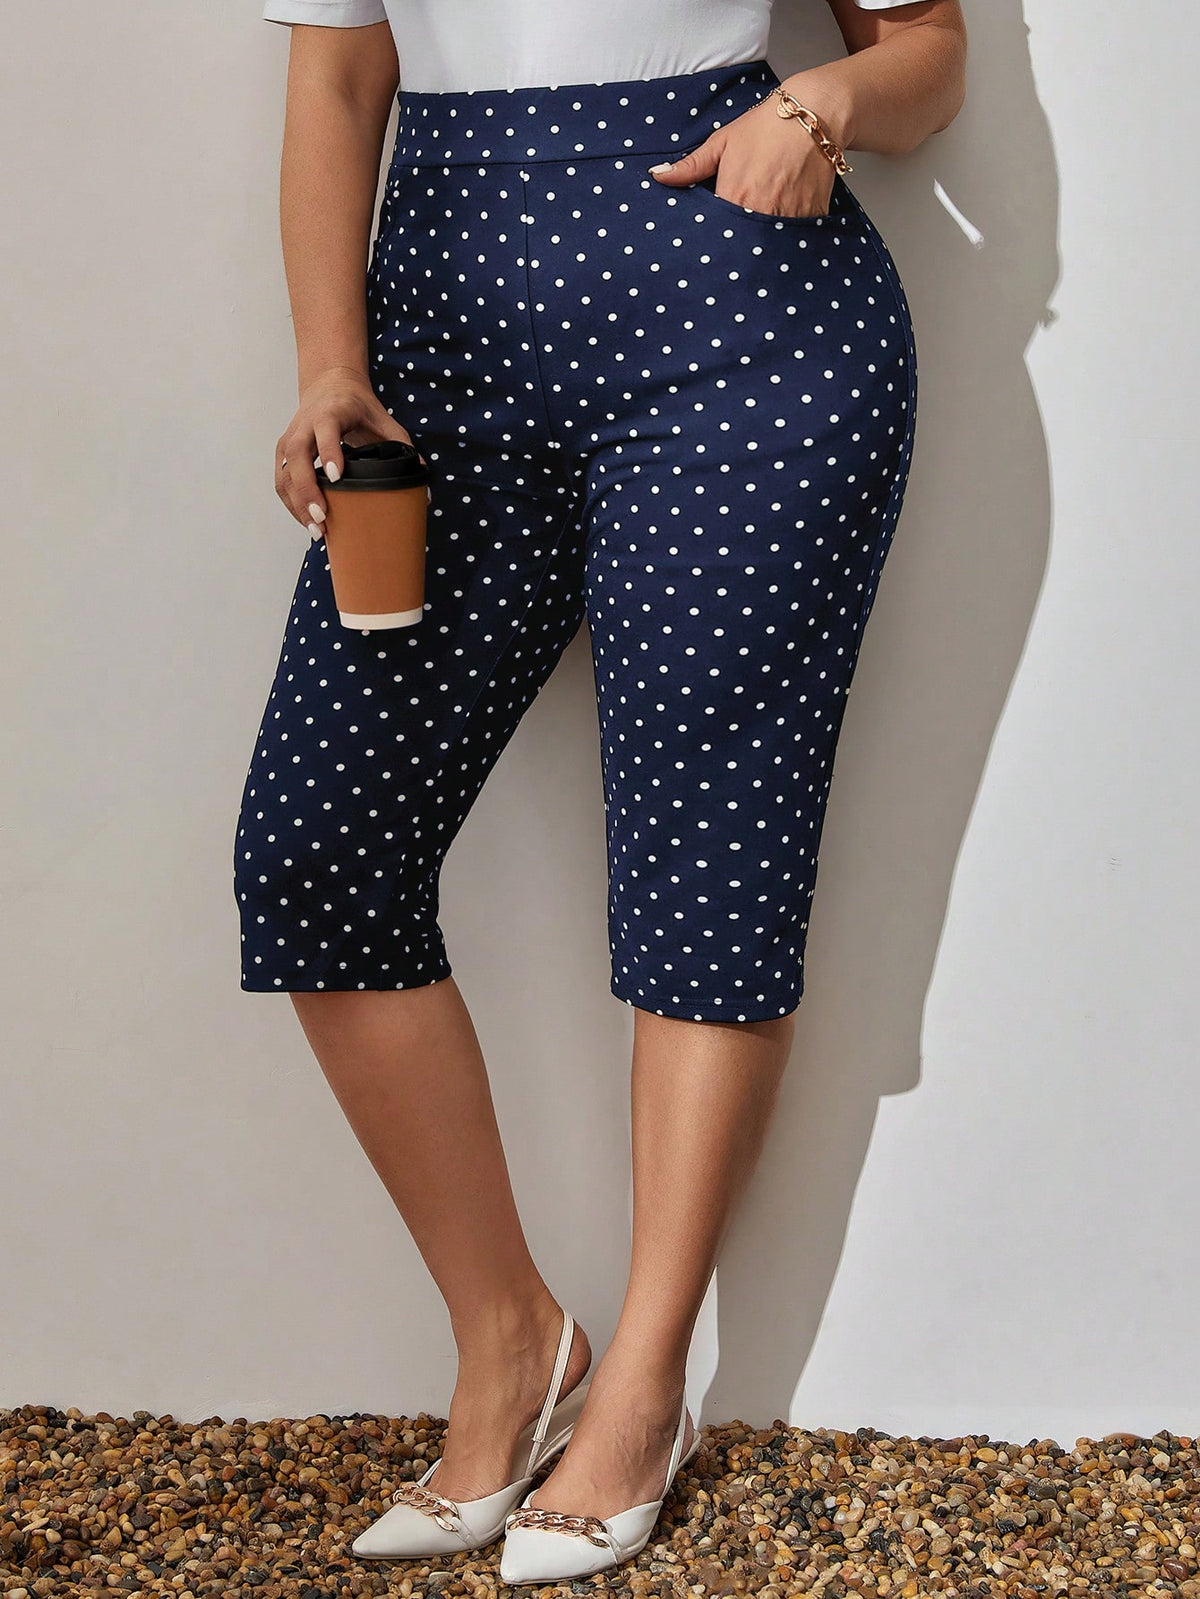 EMERY ROSE Plus Size Women'S Ultra High Waisted Polka Dot Pattern Pocket Capri Pants For Spring